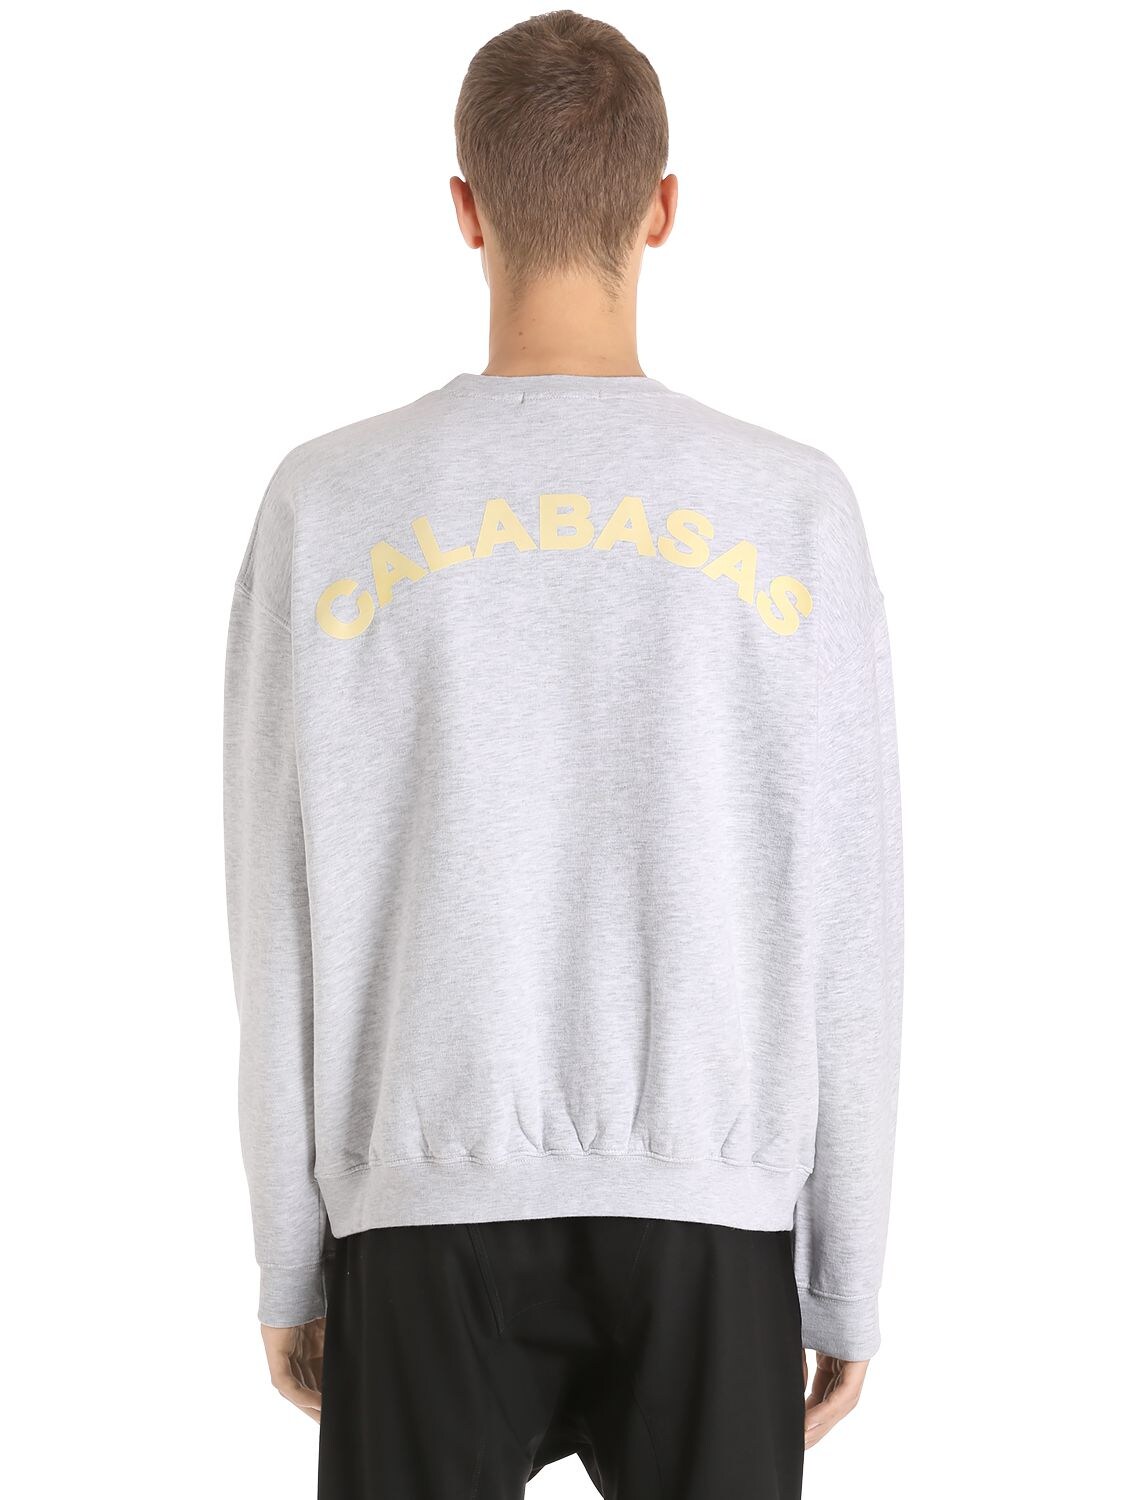 Yeezy Calabasas Printed Cotton Sweatshirt In Grey